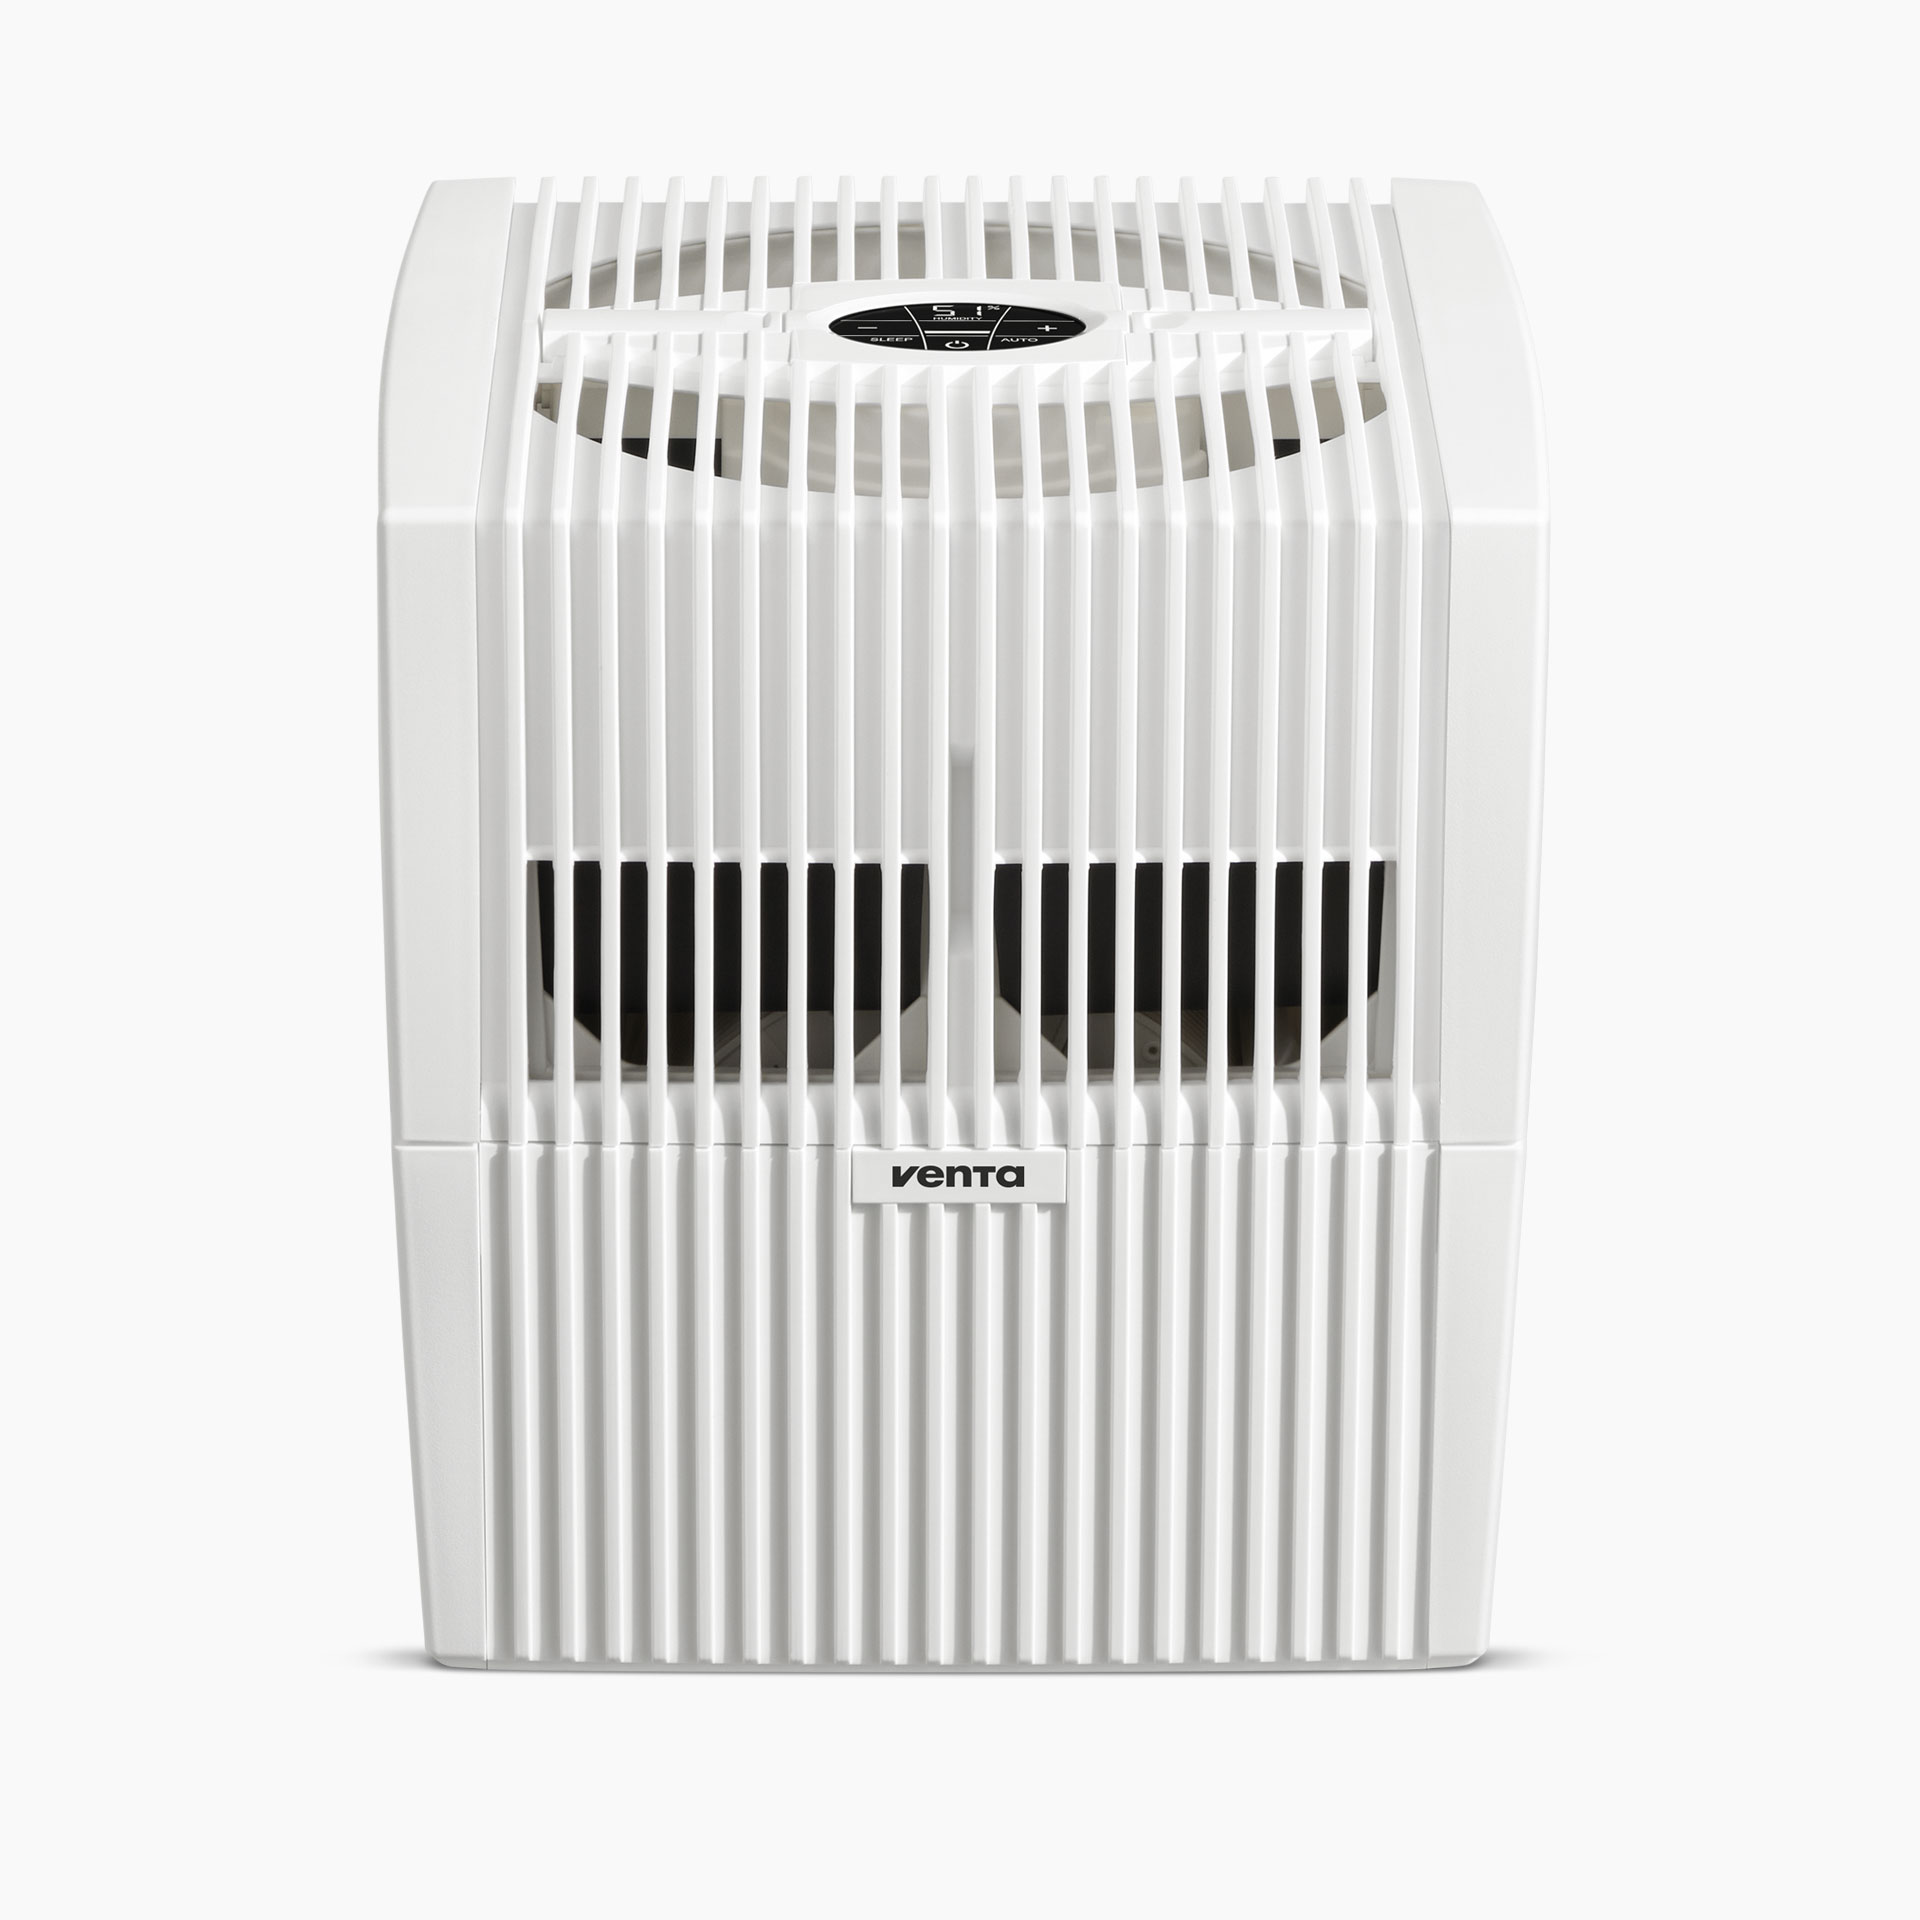 VENTA Comfort plus humidifier LW 15 white (35m2)